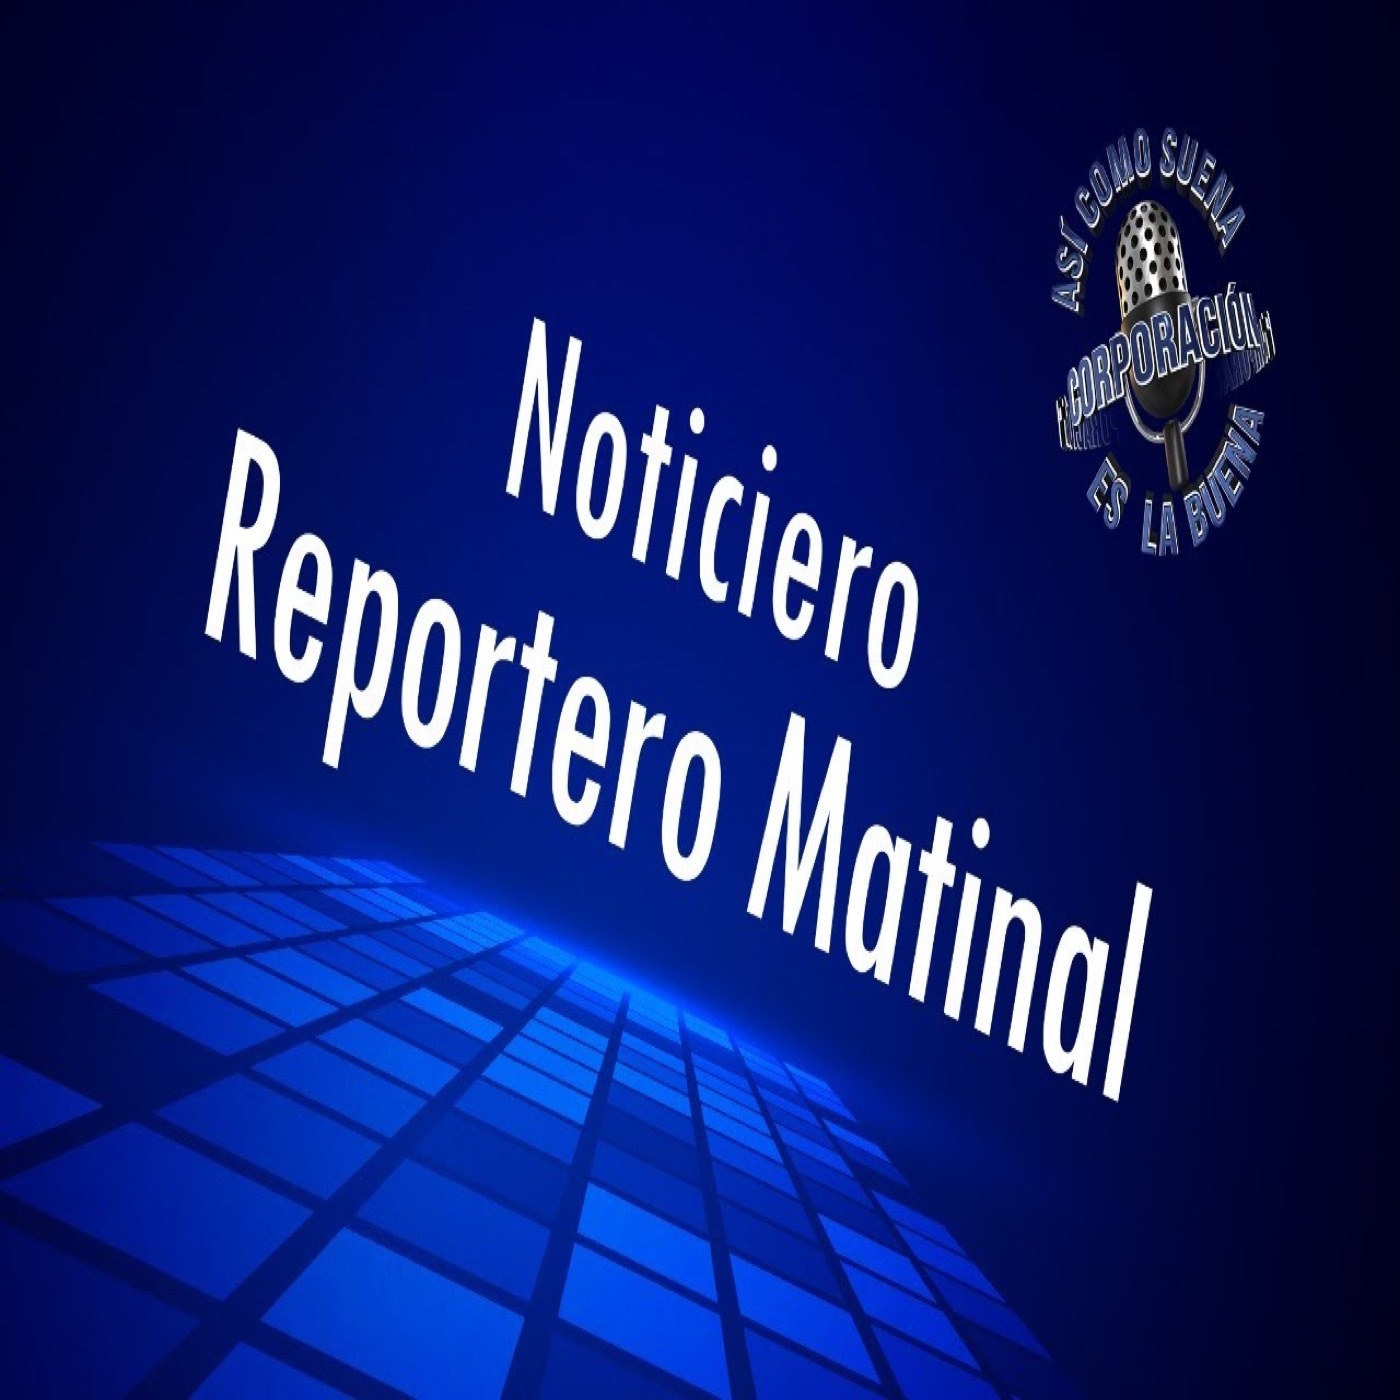 Noticiero Reportero Matinal - Tuesday, November 22, 2022